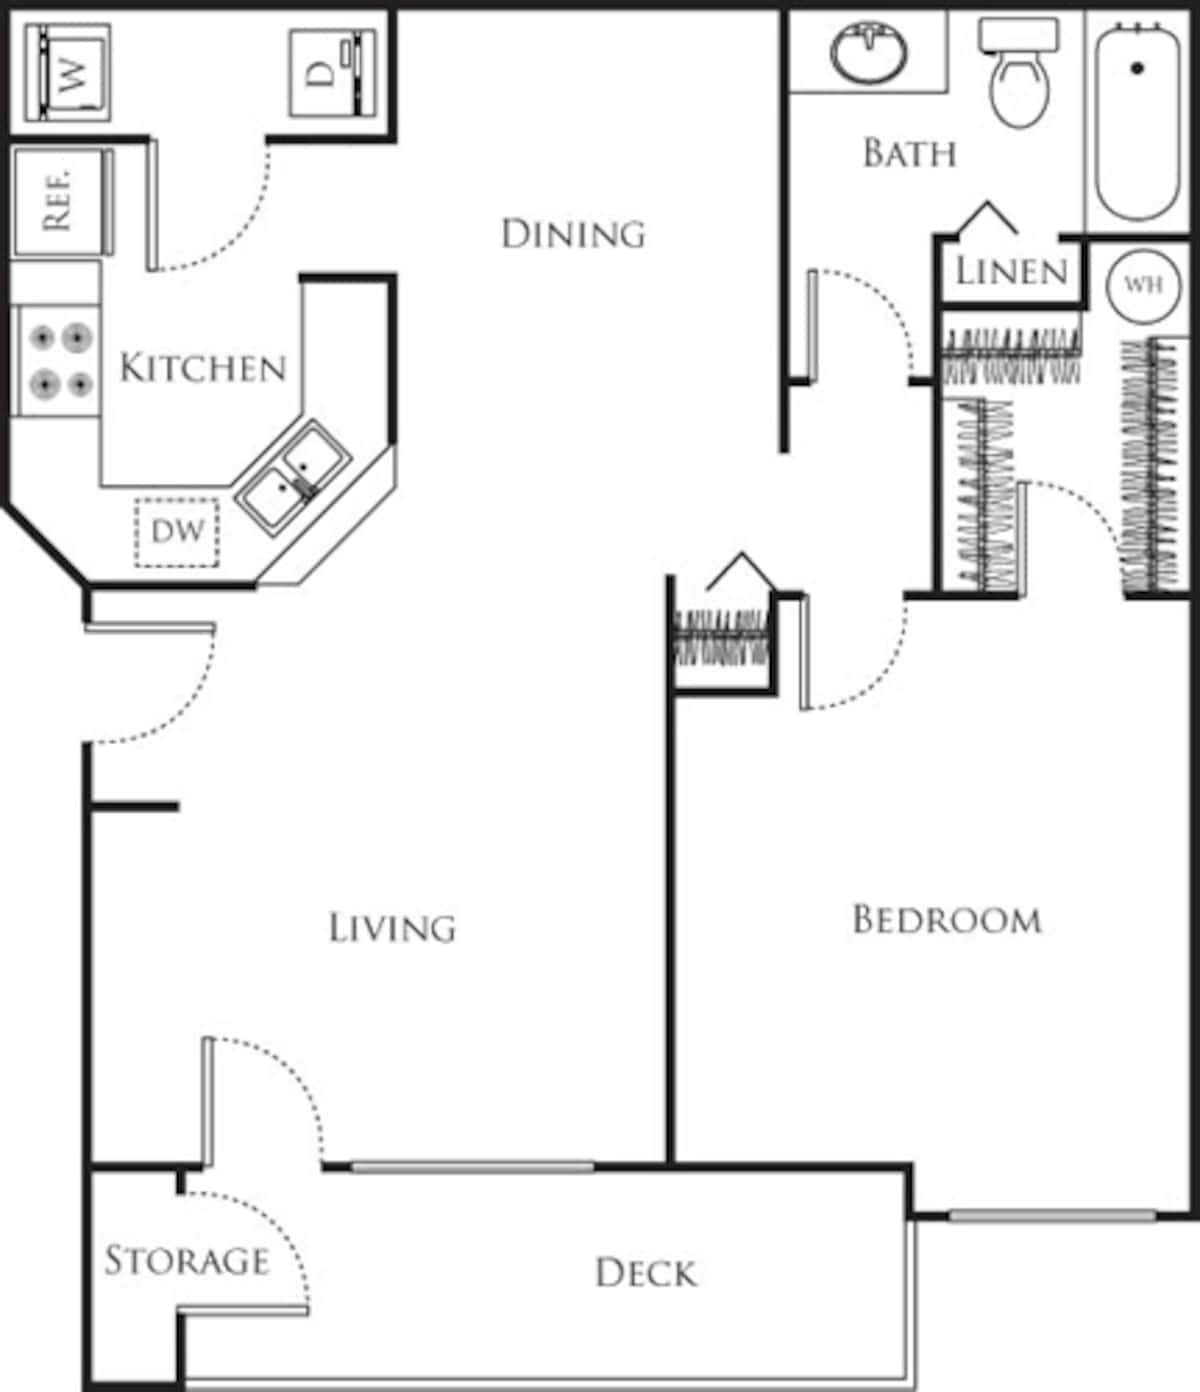 Floorplan diagram for White Pine, showing 1 bedroom